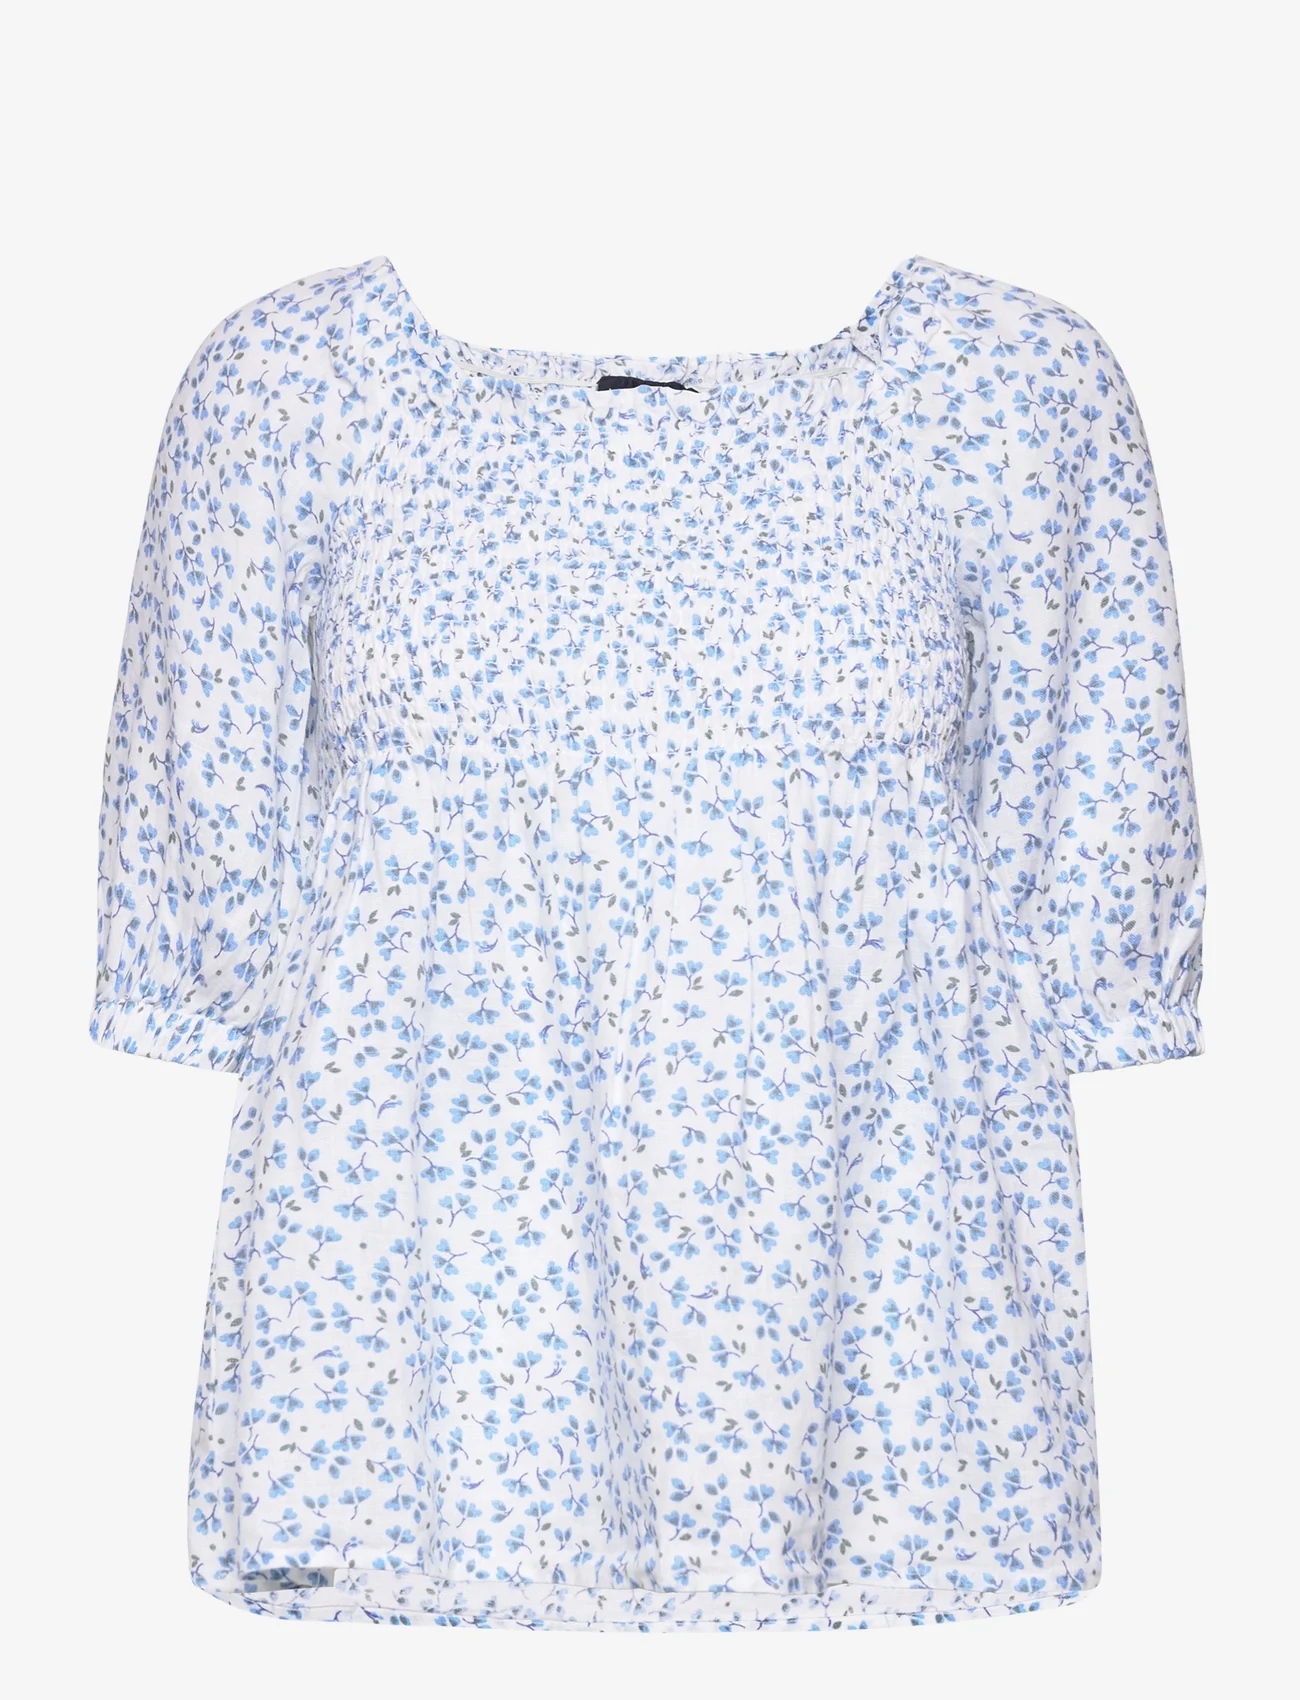 Lexington Clothing - Hazel Printed Linen Smock Top - blouses korte mouwen - blue flower print - 0